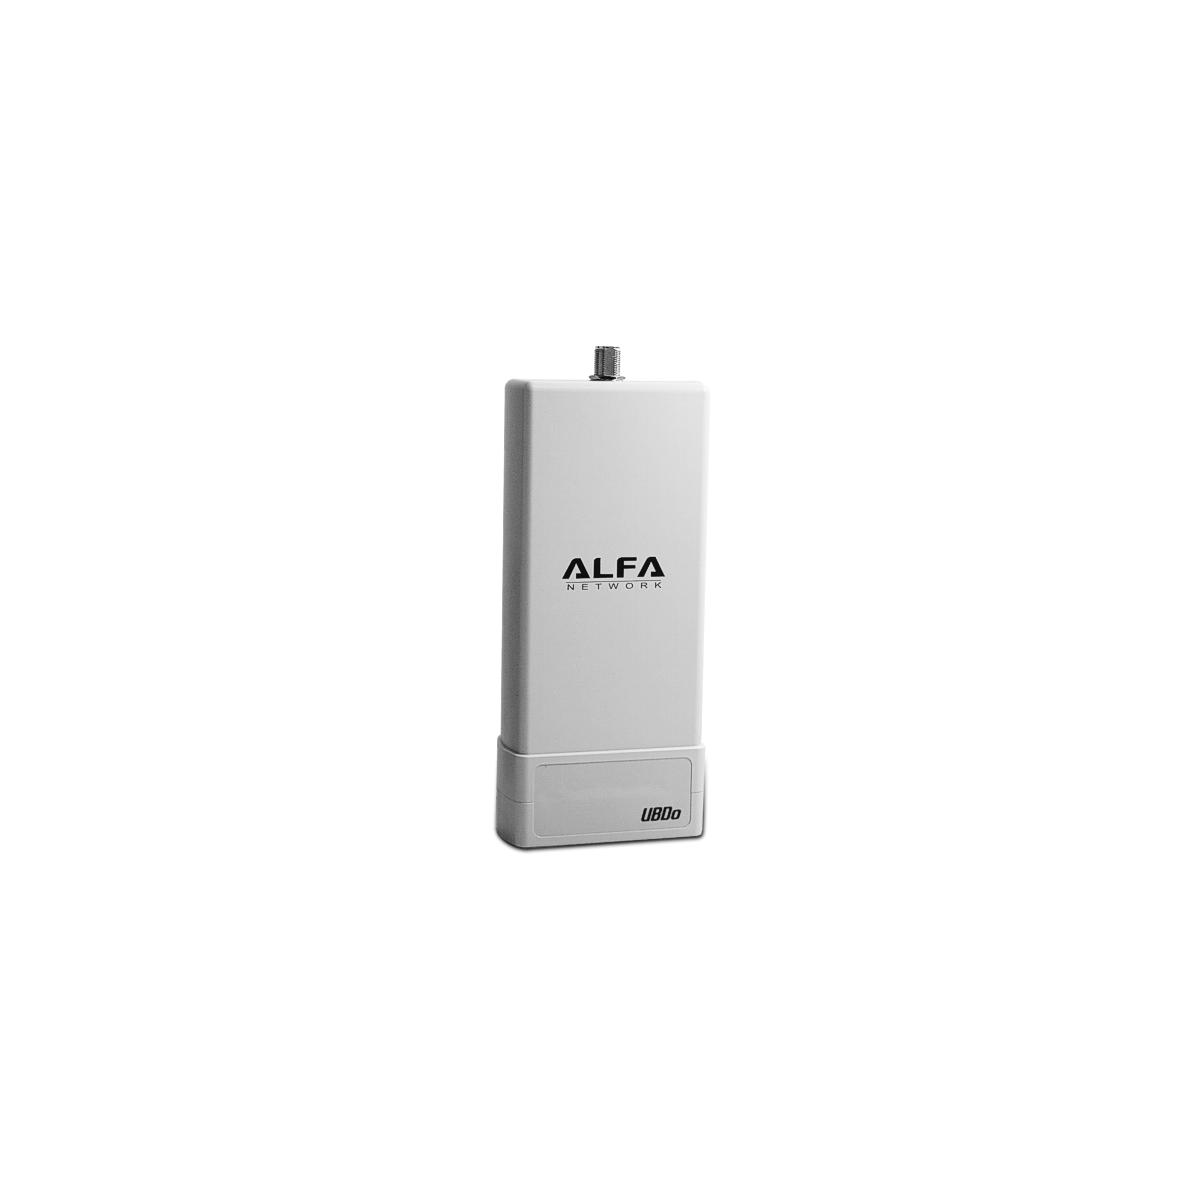 ALFA NETWORK UBDO-N Router